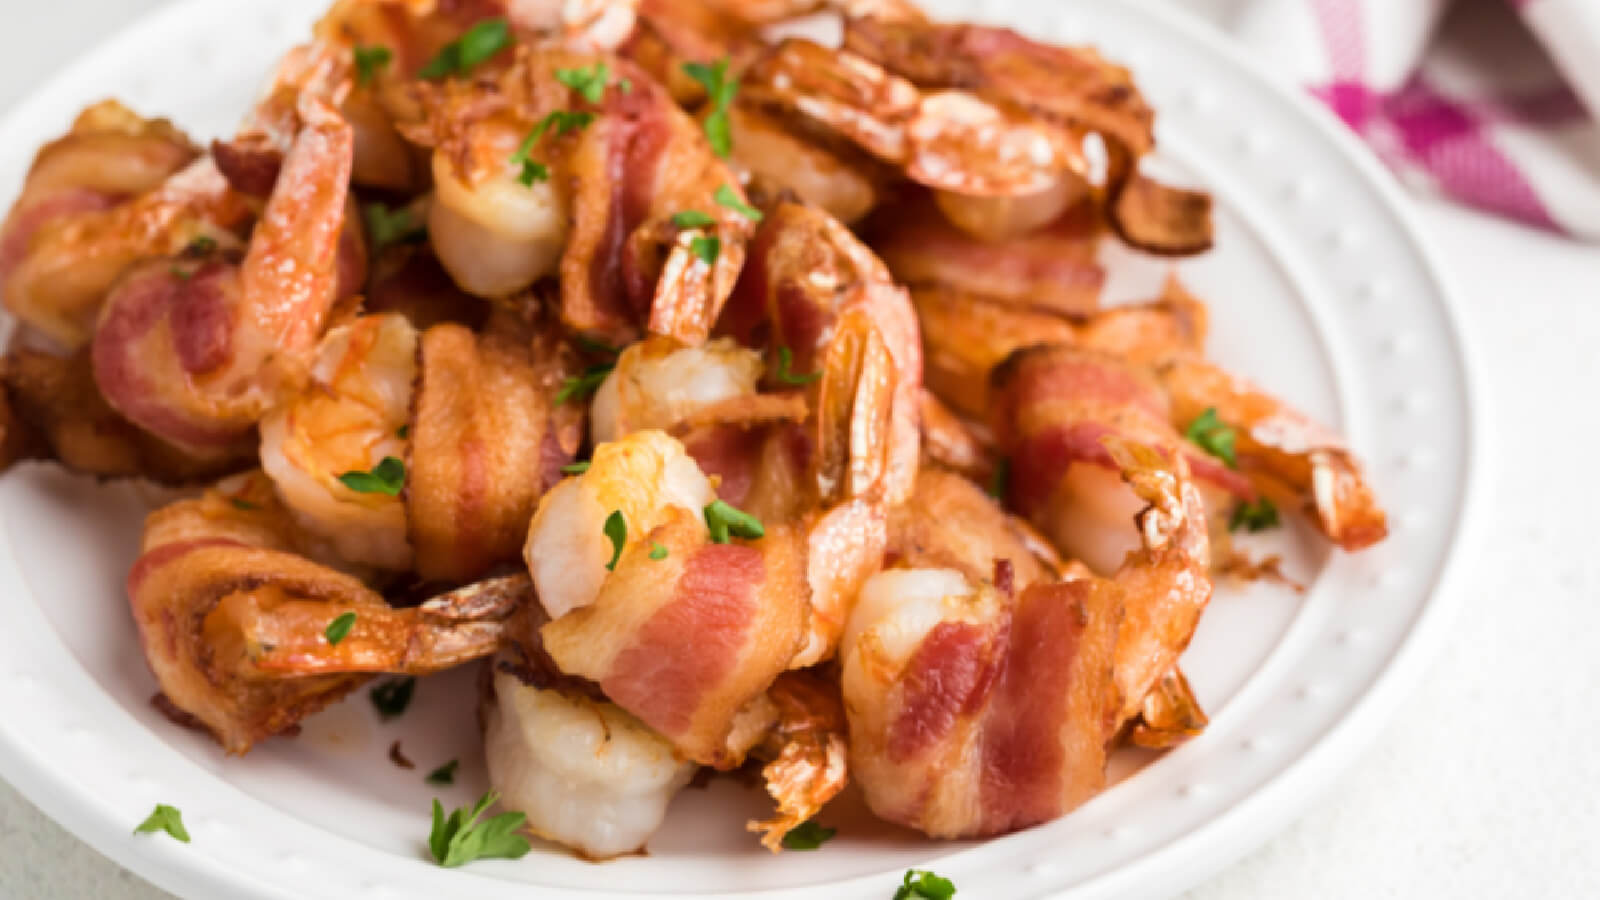 bacon wrapped shrimp on a white plate, ready to serv.e